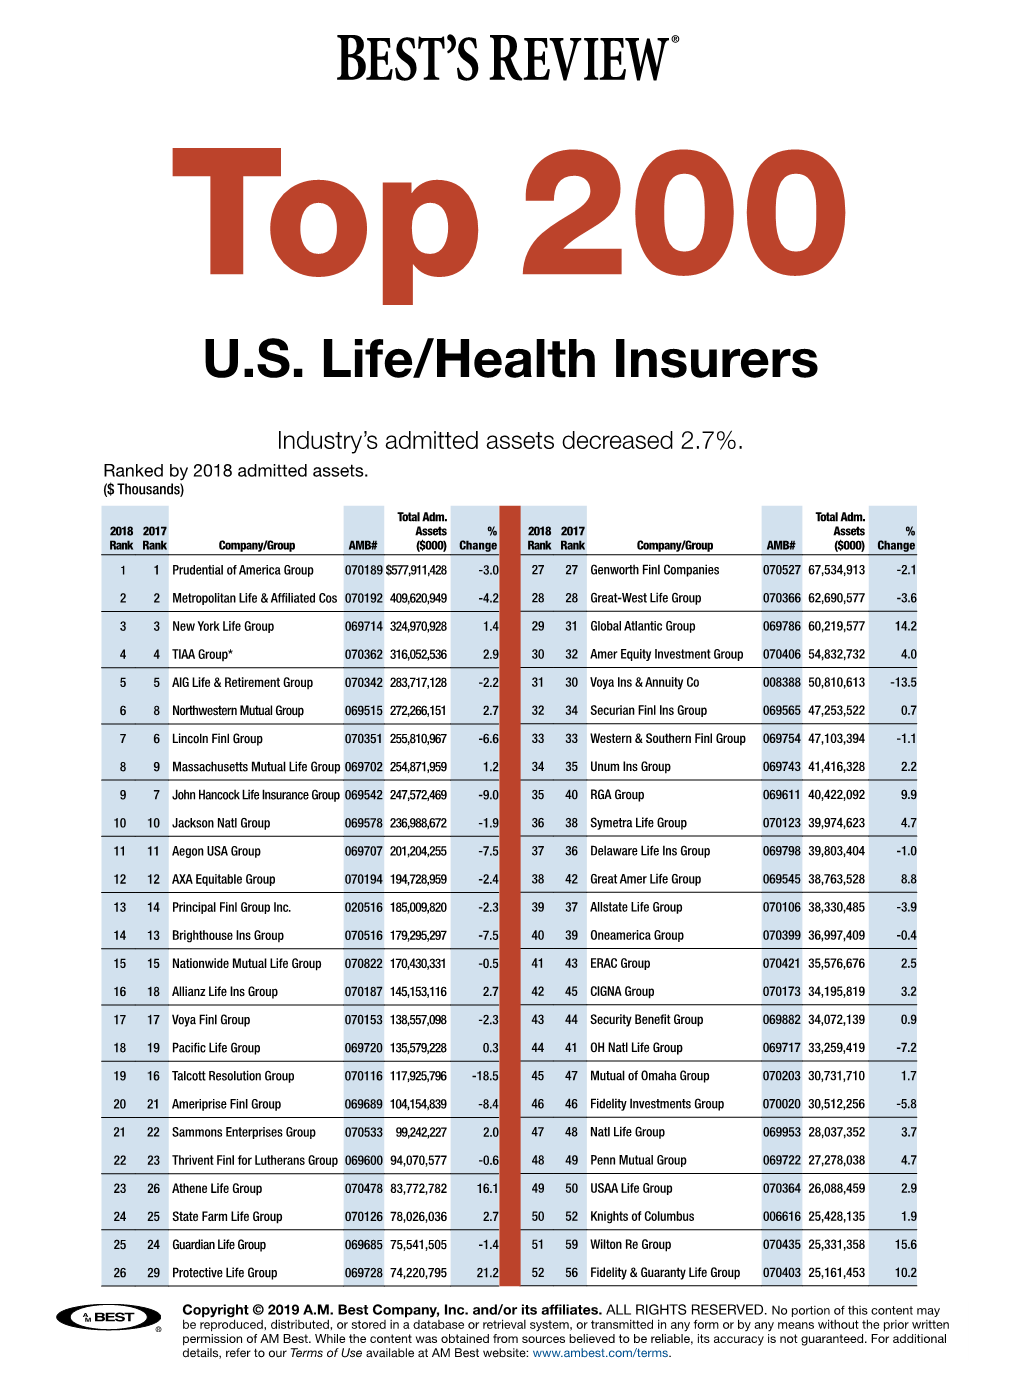 Top 200 U.S. Life/Health Insurers